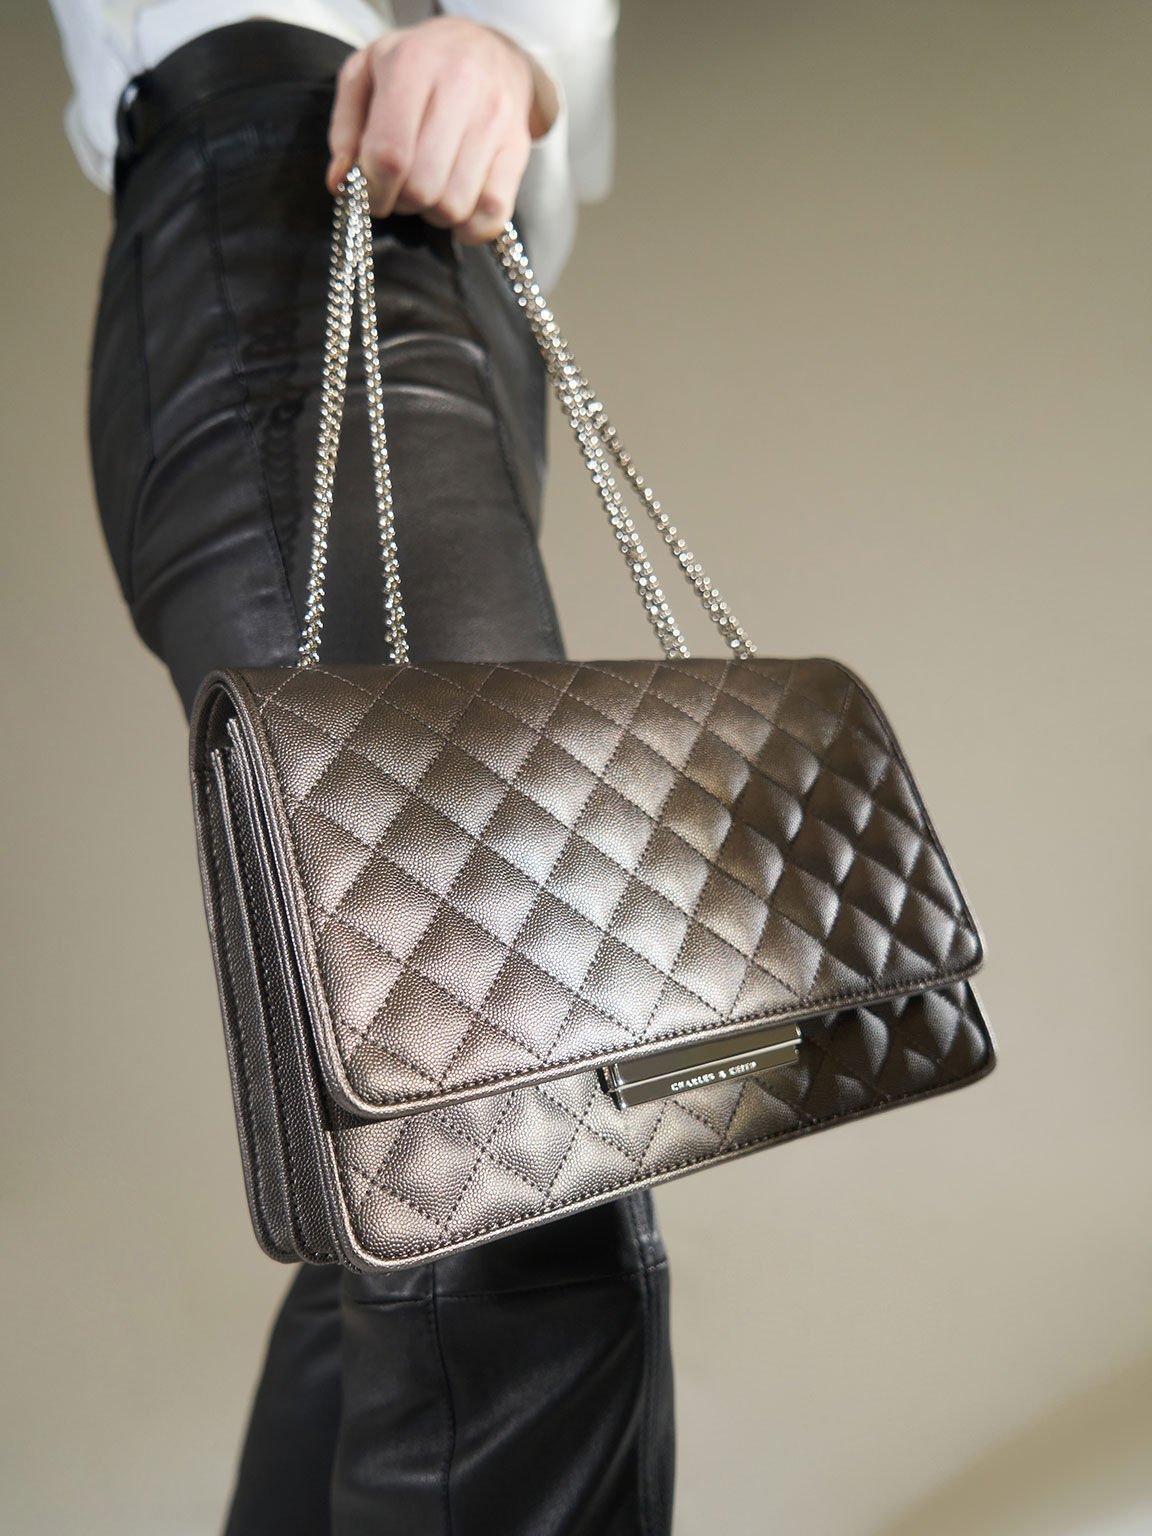 Touch Ups Clutch Handbag, Pewter: Handbags: Amazon.com